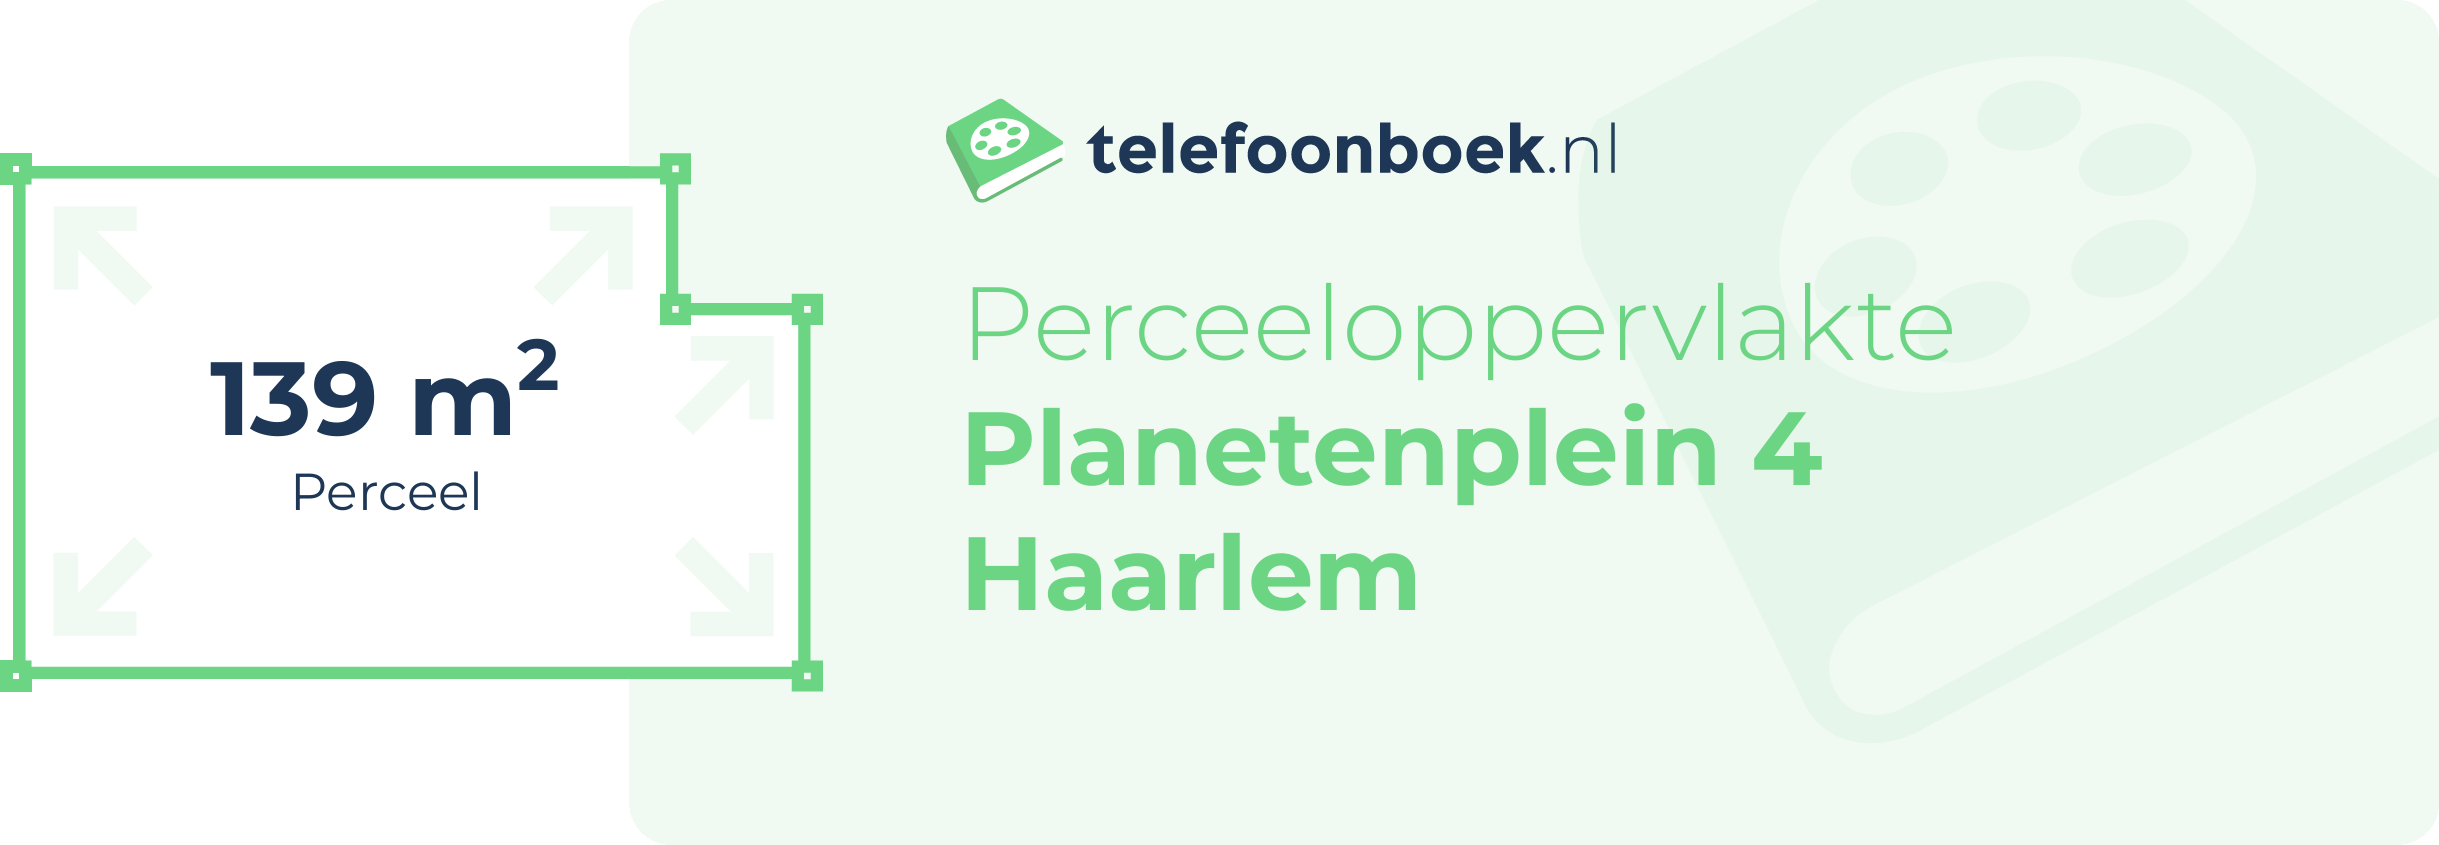 Perceeloppervlakte Planetenplein 4 Haarlem